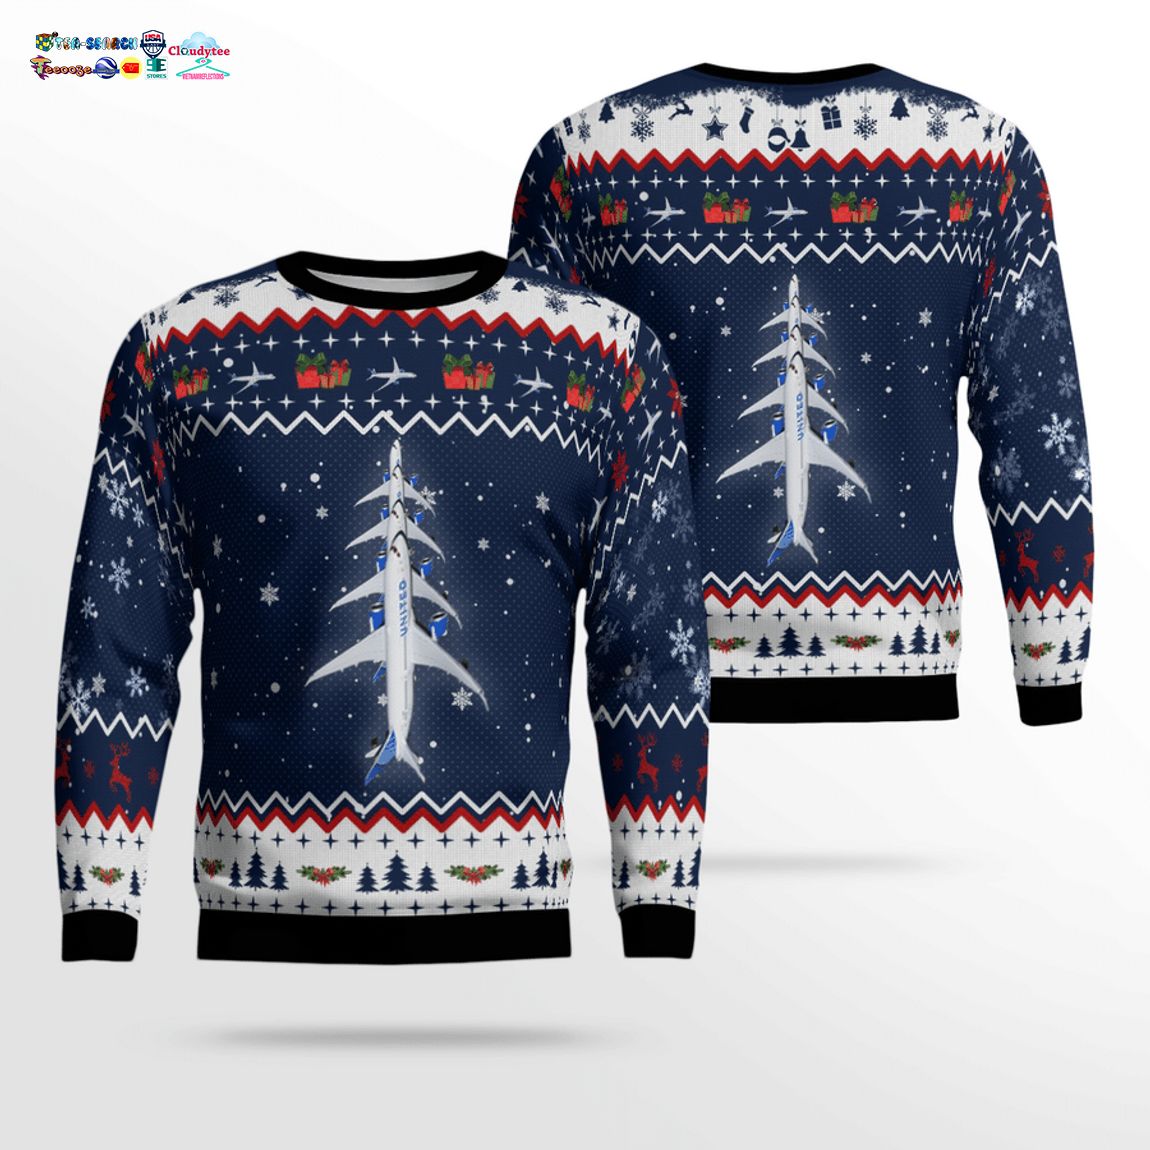 United Airlines Boeing 787-9 Dreamliner Ver 3 3D Christmas Sweater